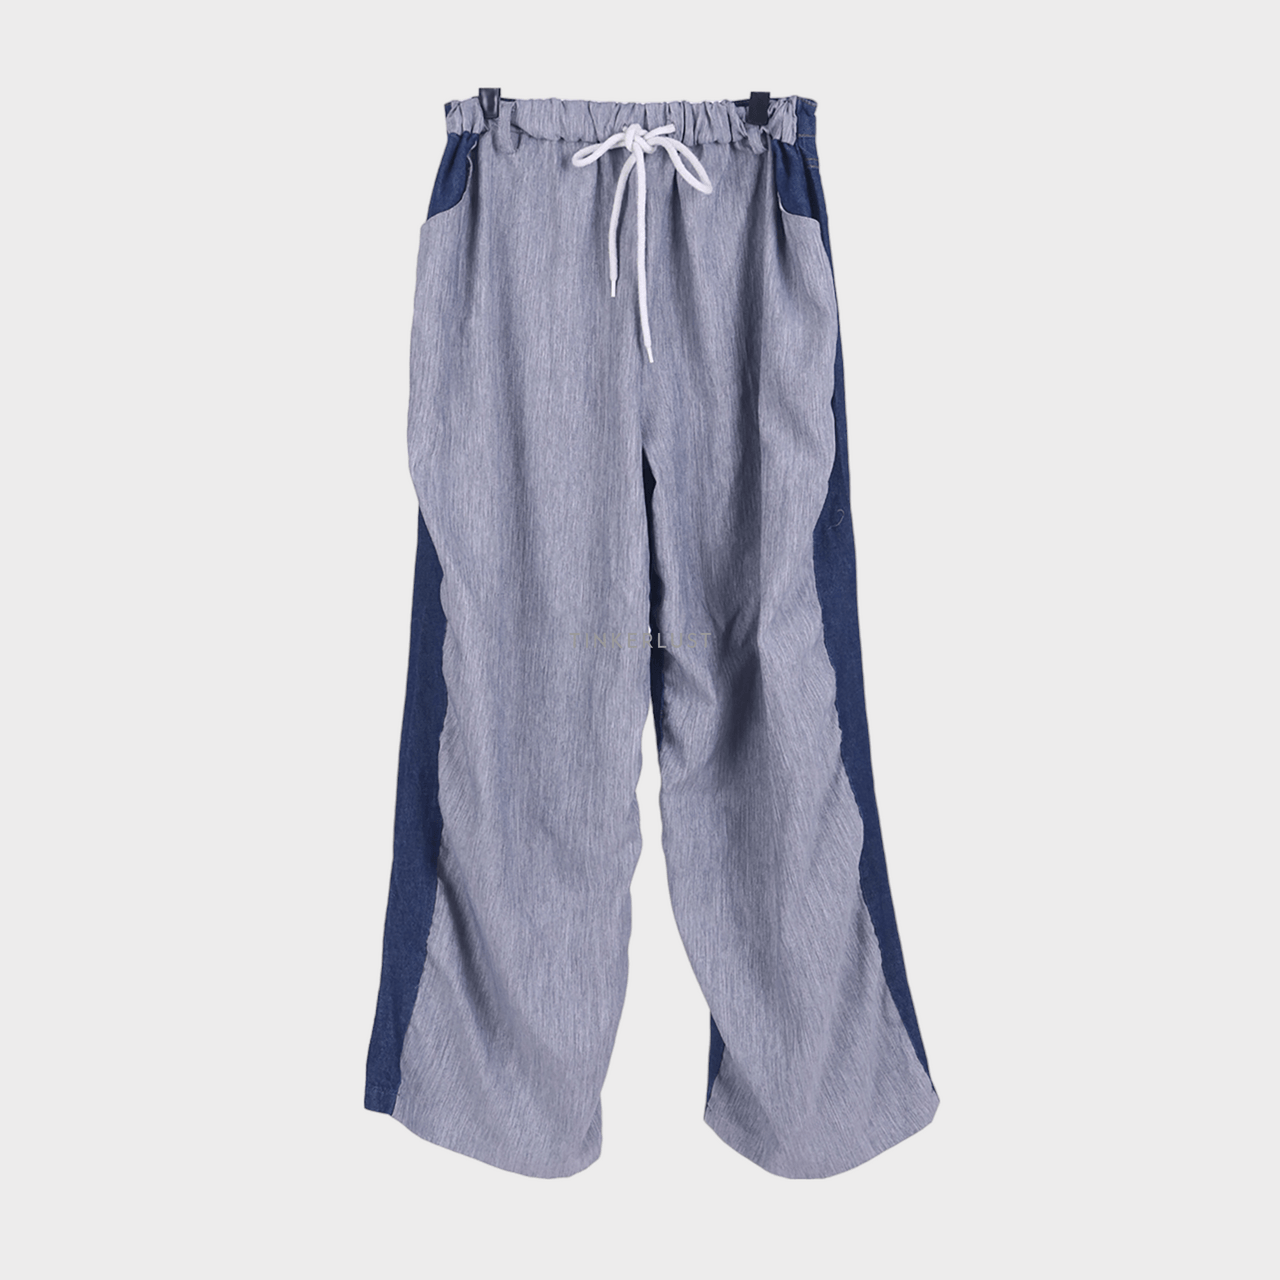 Cotton Ink Blue & Grey Long Pants